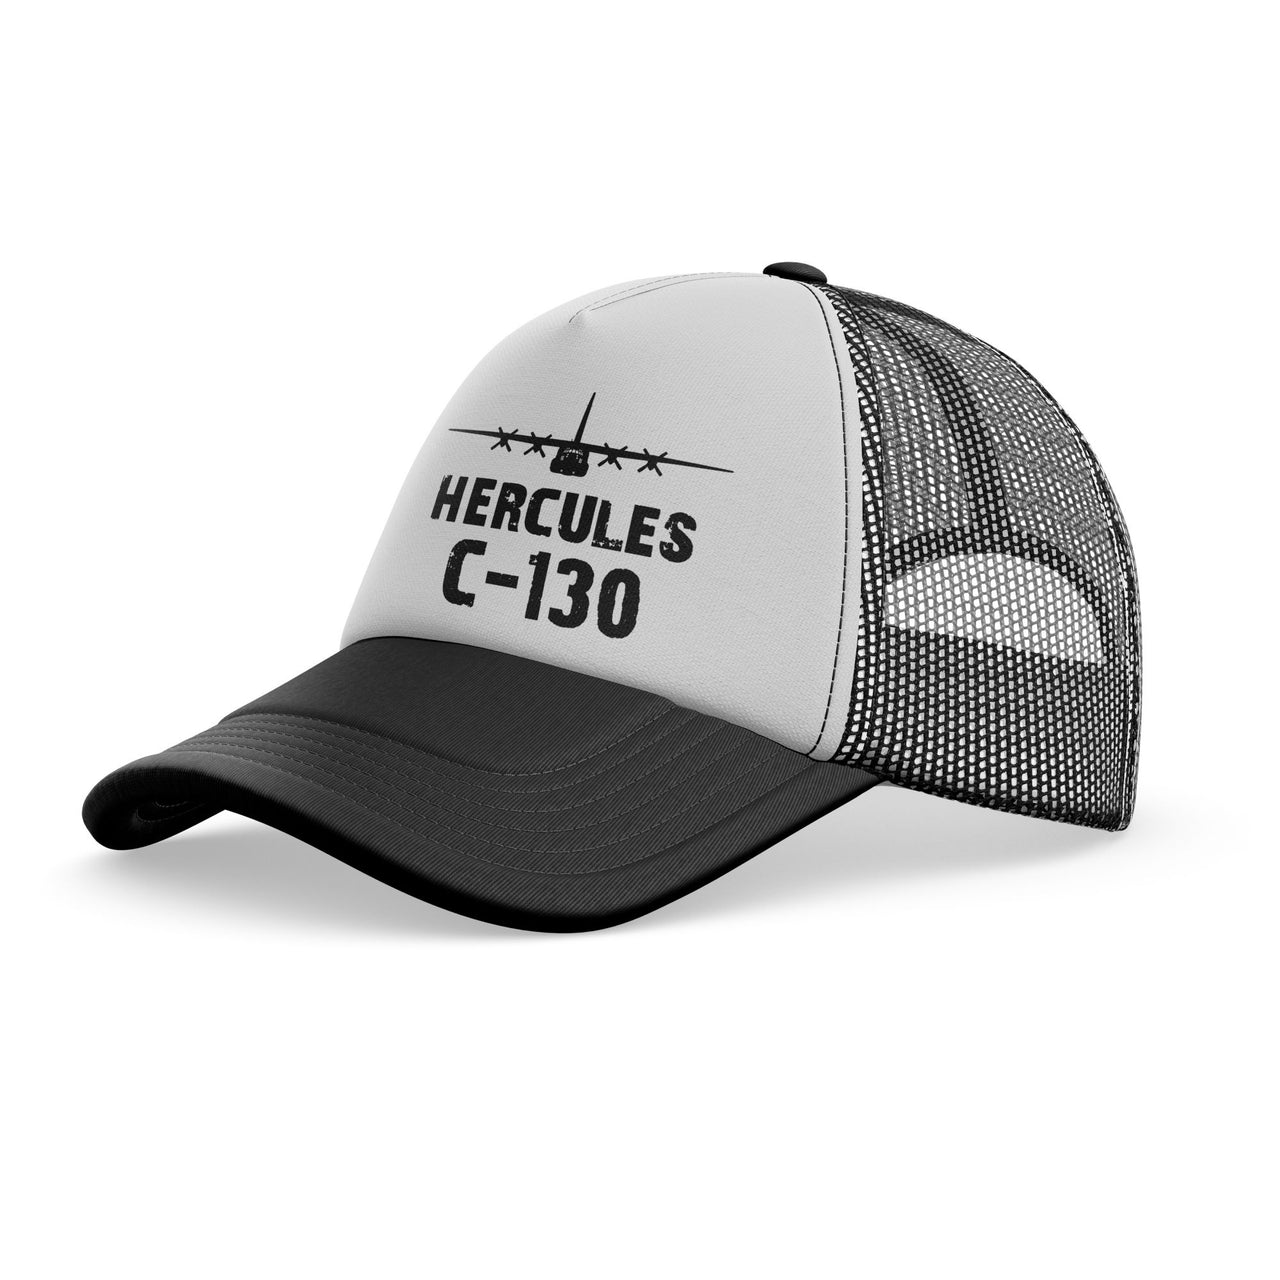 Hercules C-130 & Plane Designed Trucker Caps & Hats